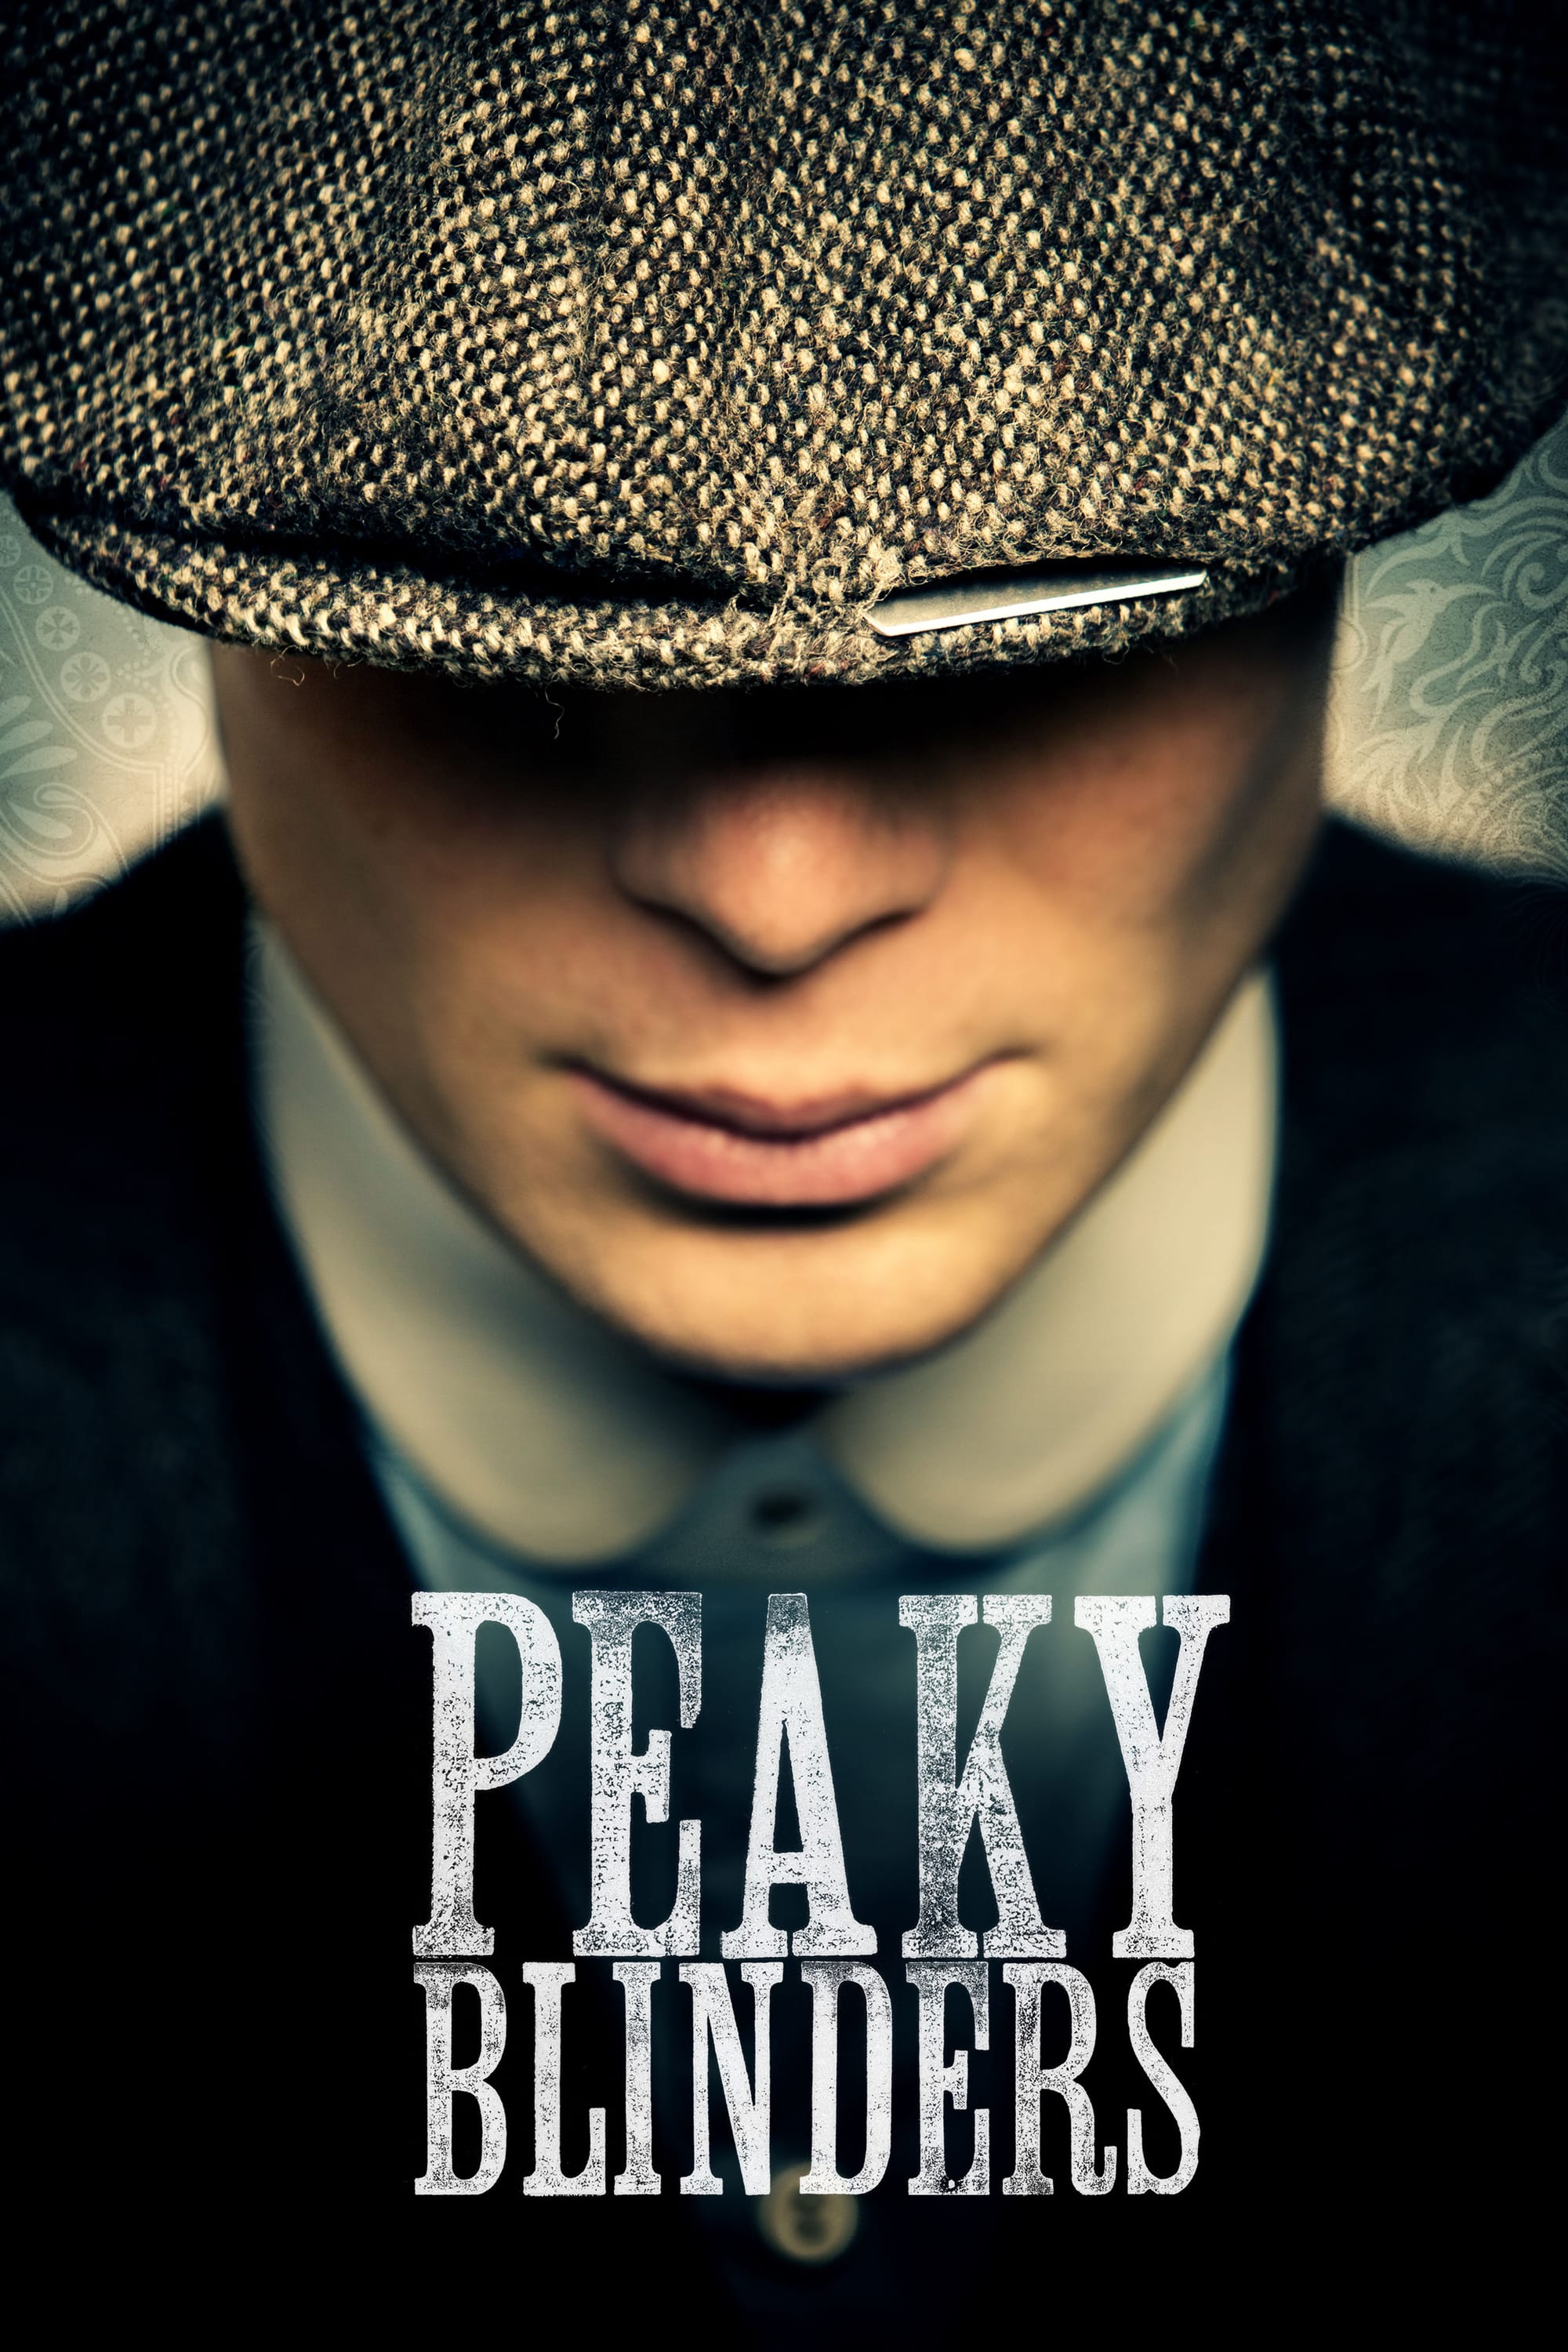 Peaky Blinders - Saison 5